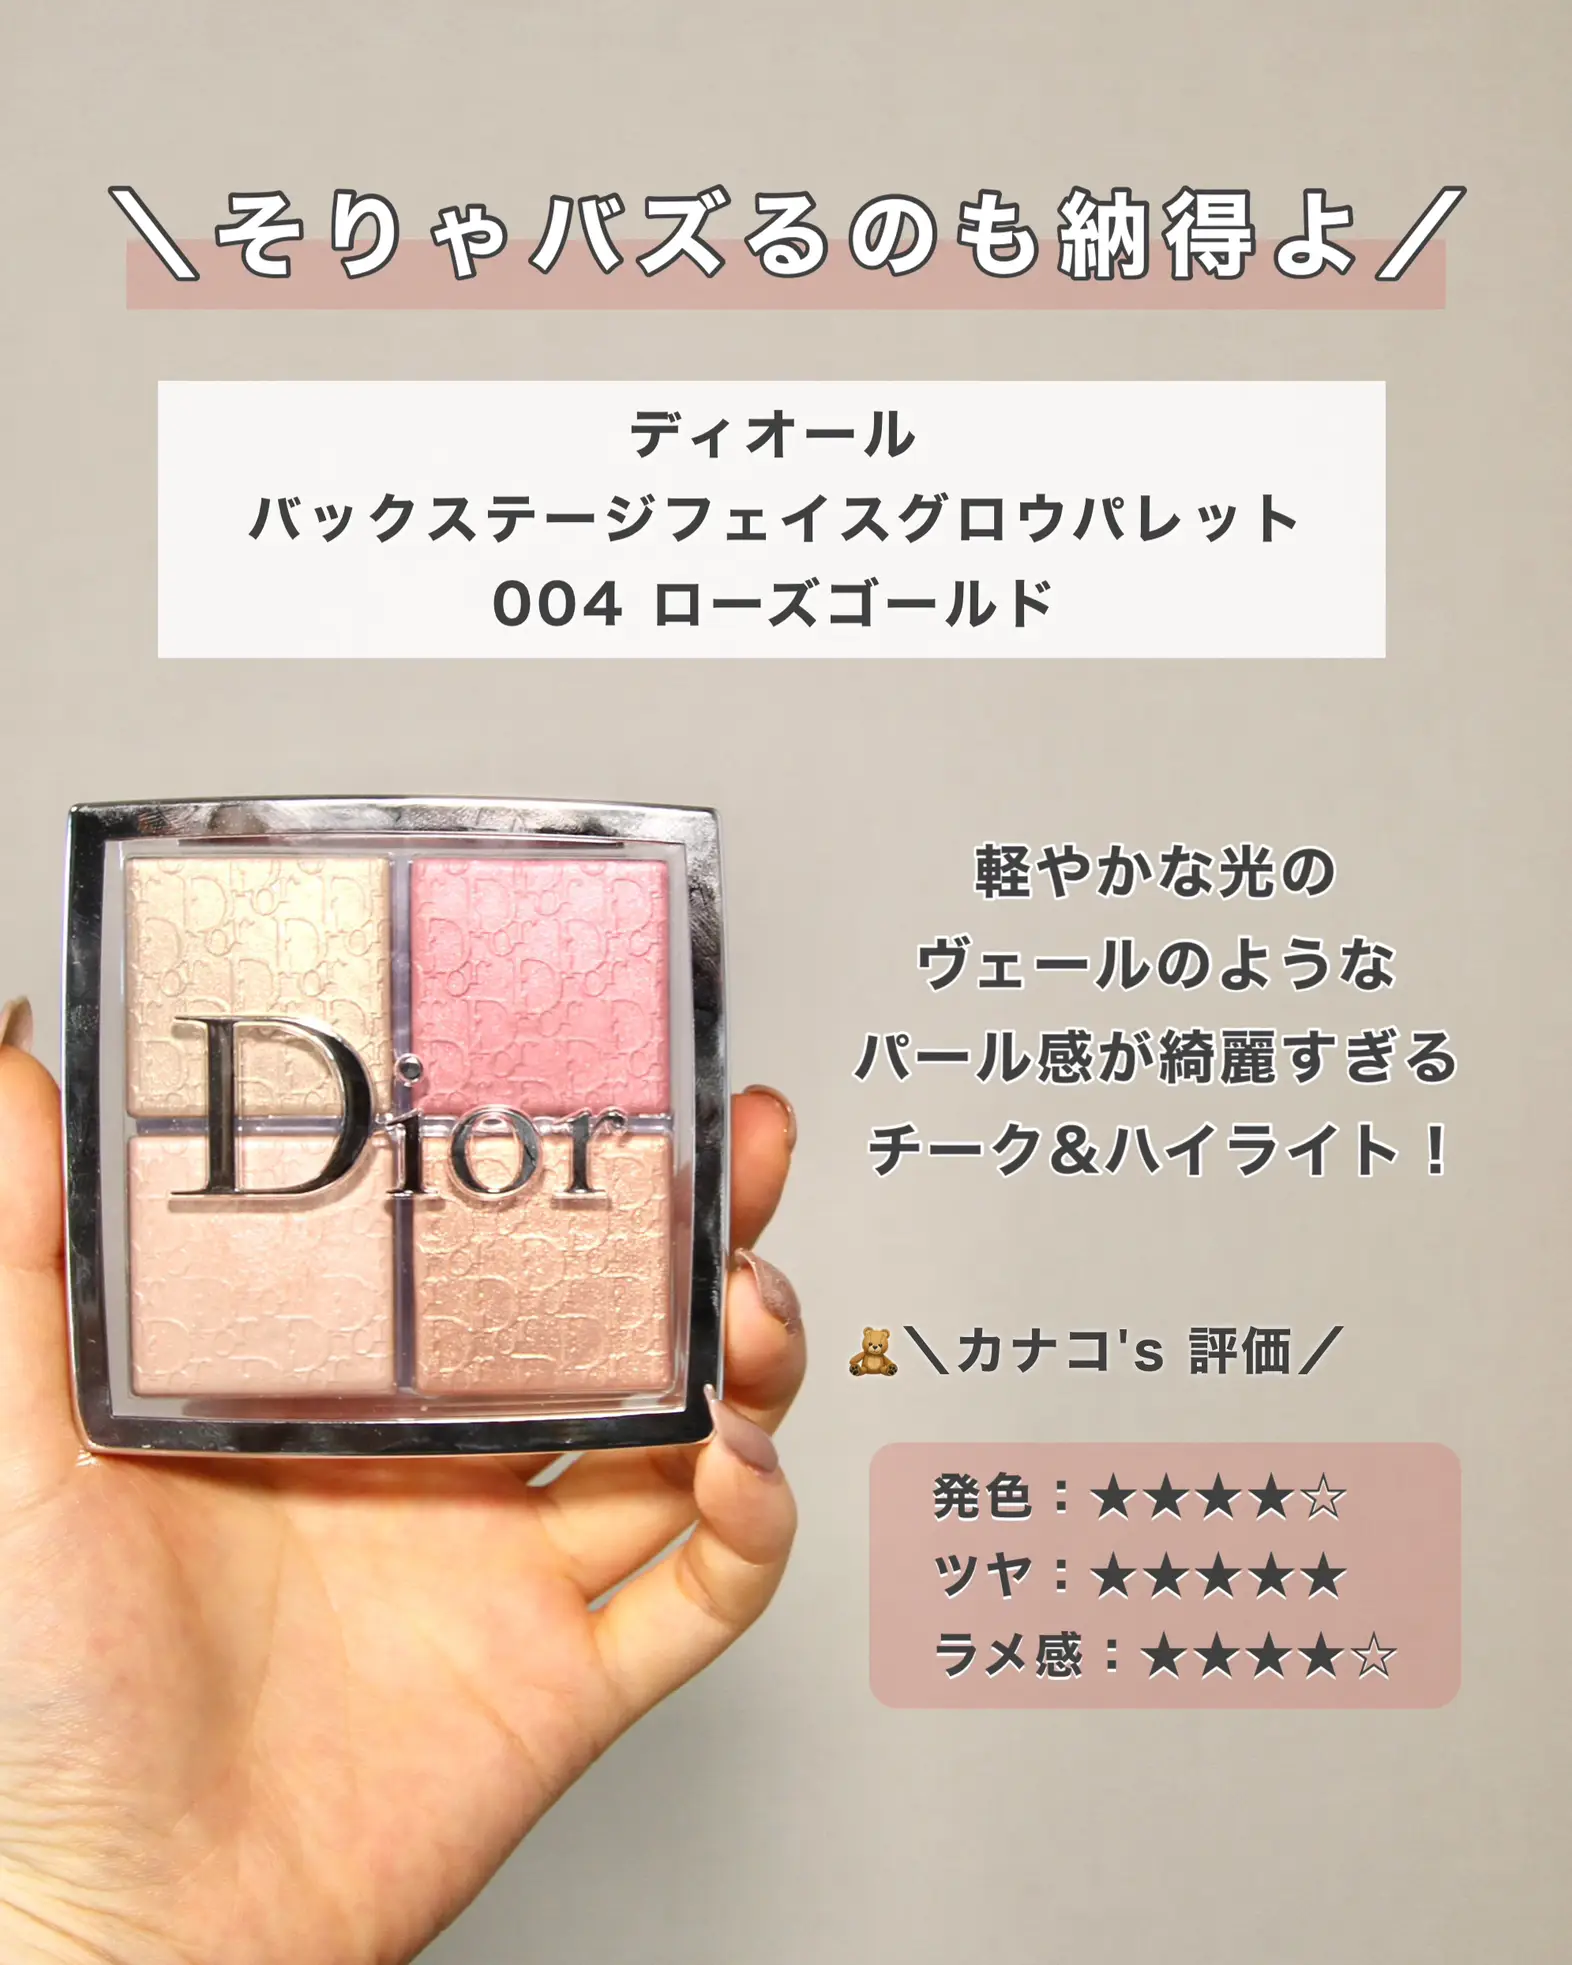 Dior ハイライト チーク - メイクアップ